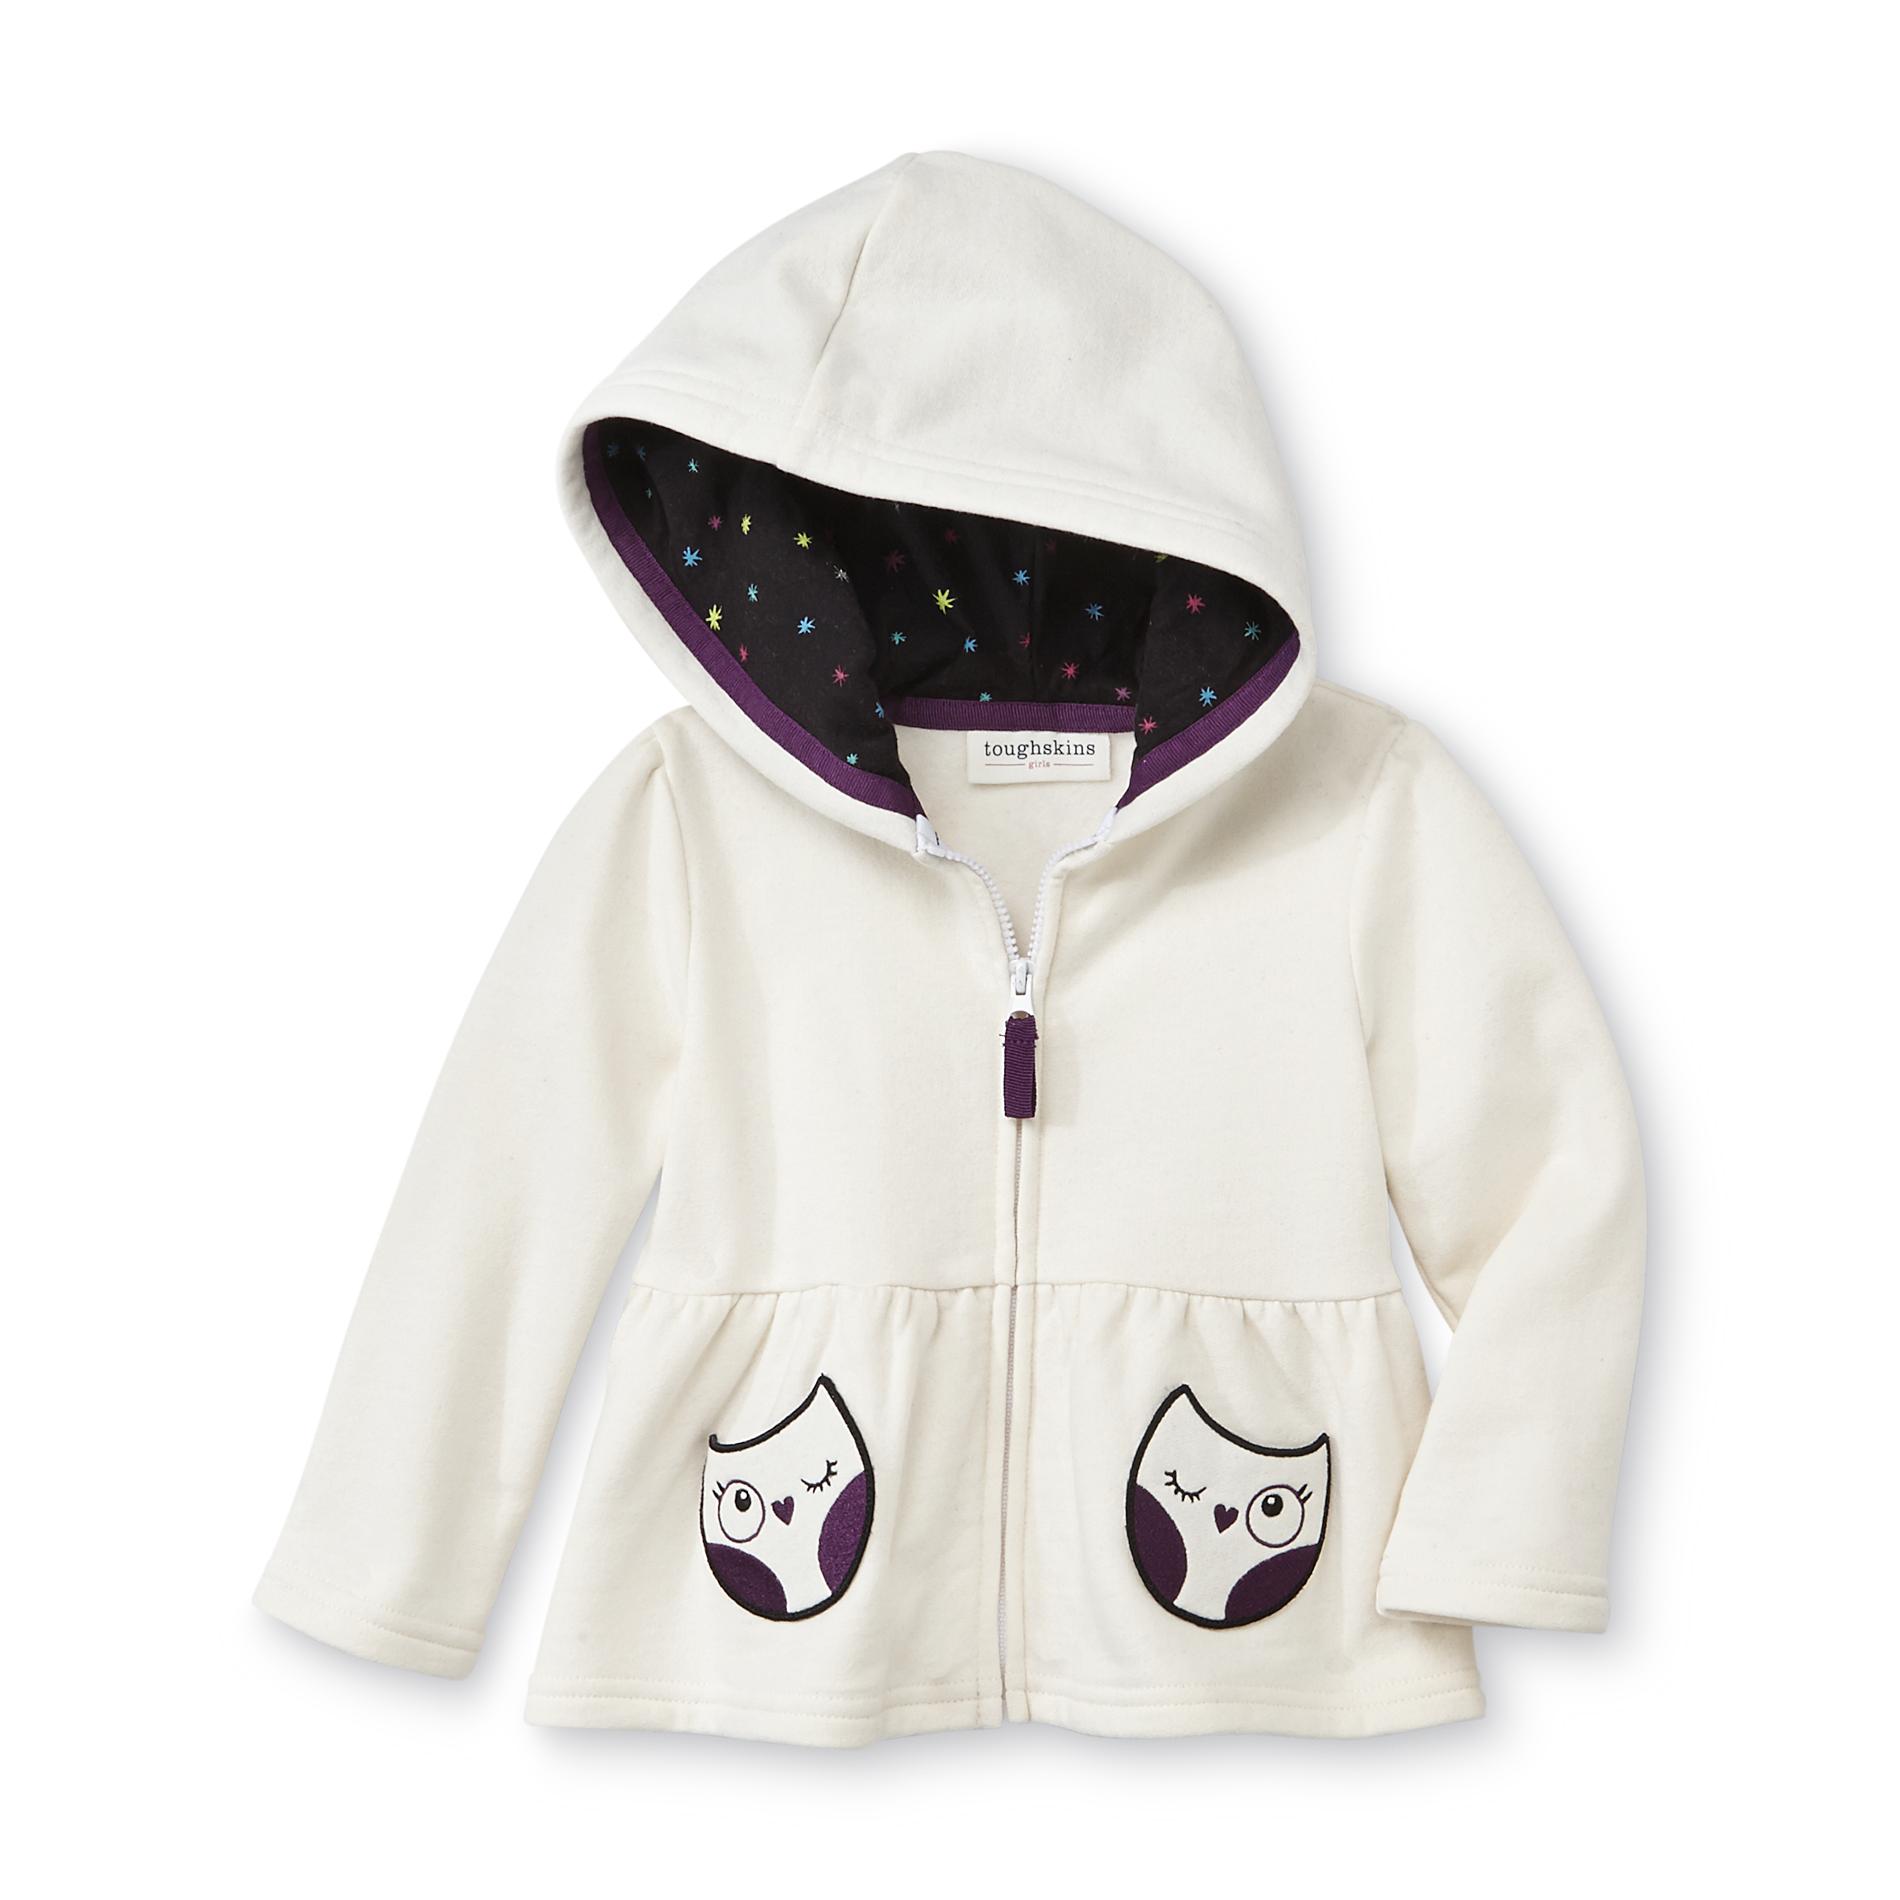 Toughskins Infant & Toddler Girl's Hoodie Jacket - Owl